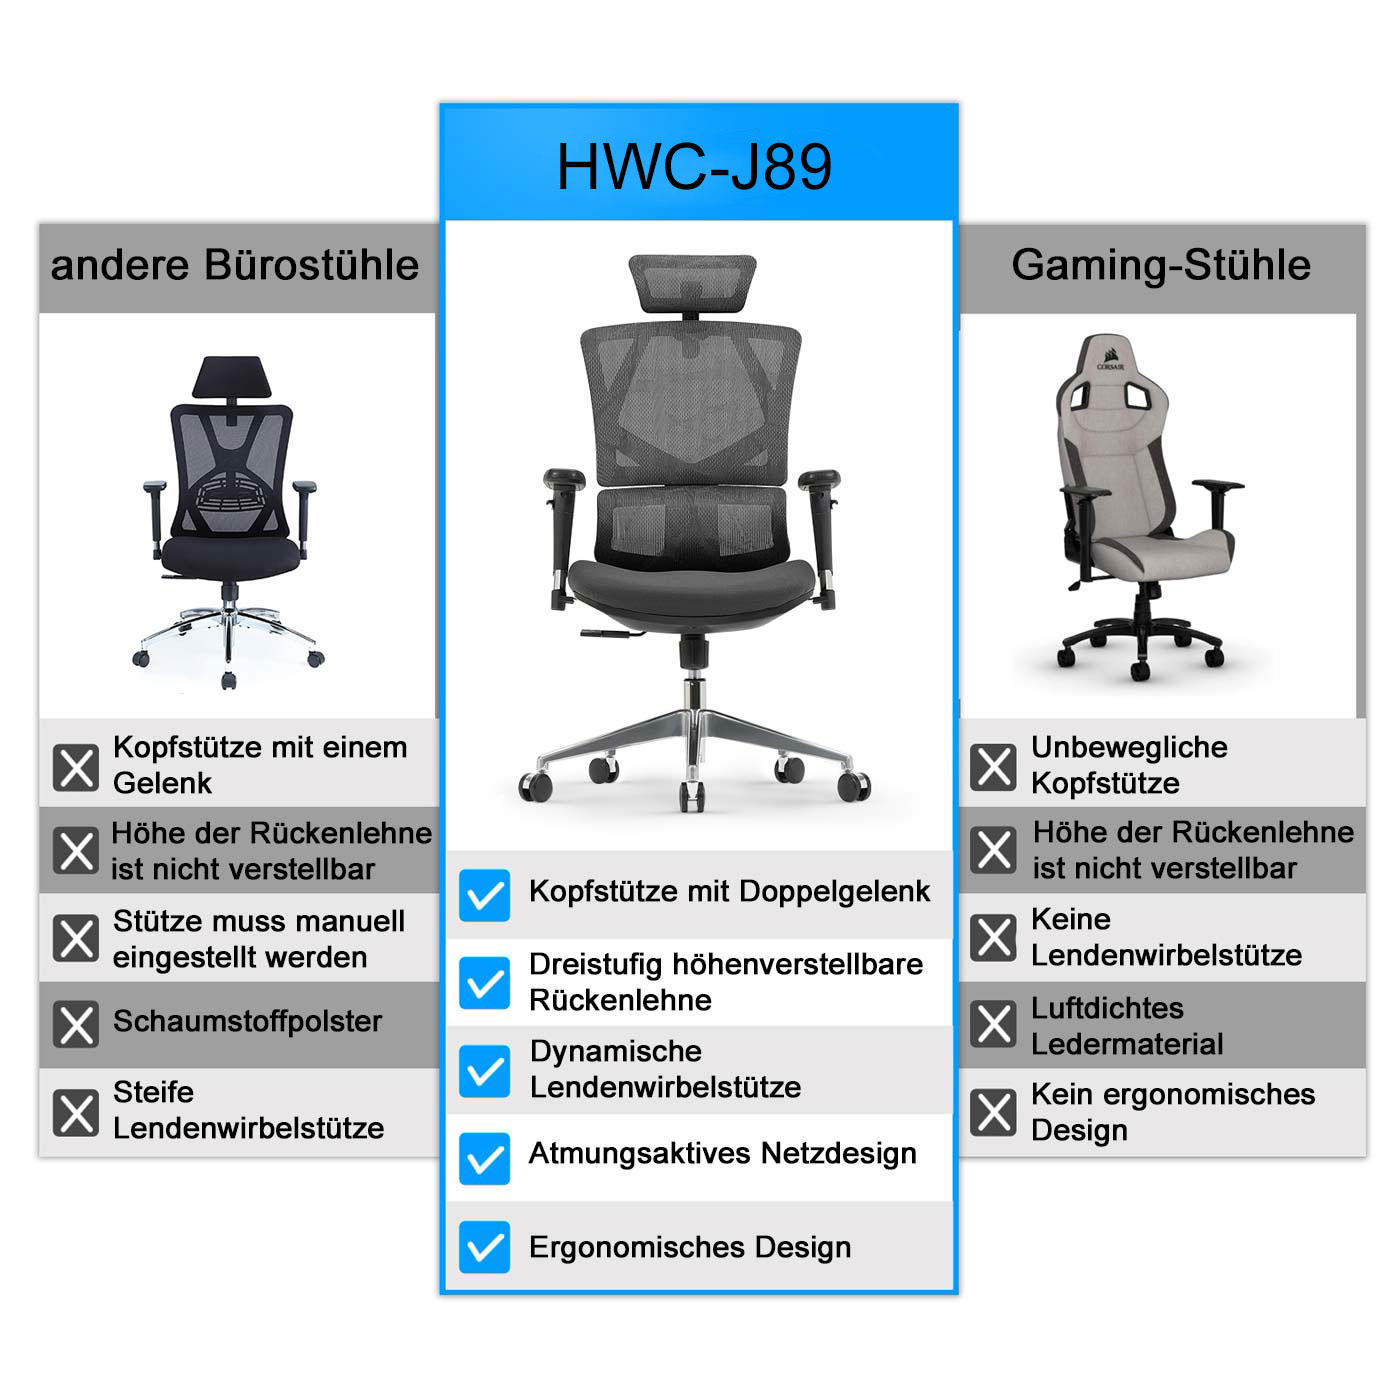 Brostuhl HWC-J89 Vergleichsbild